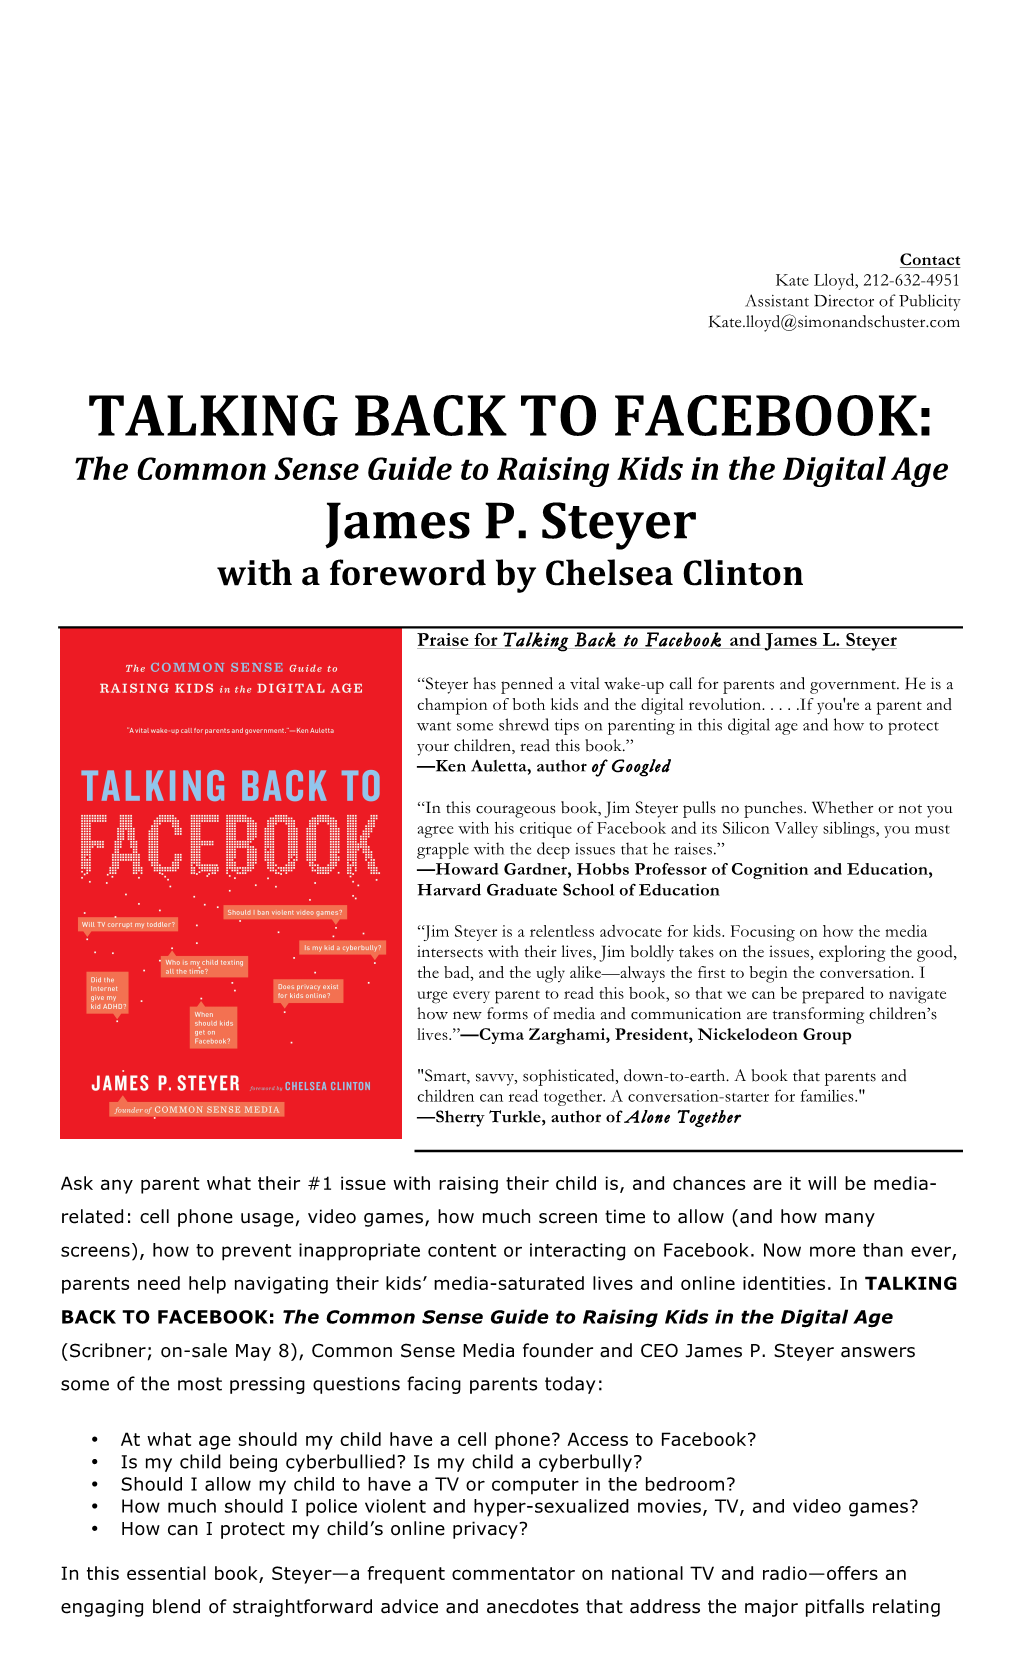 Talking Back to Facebook Press Release